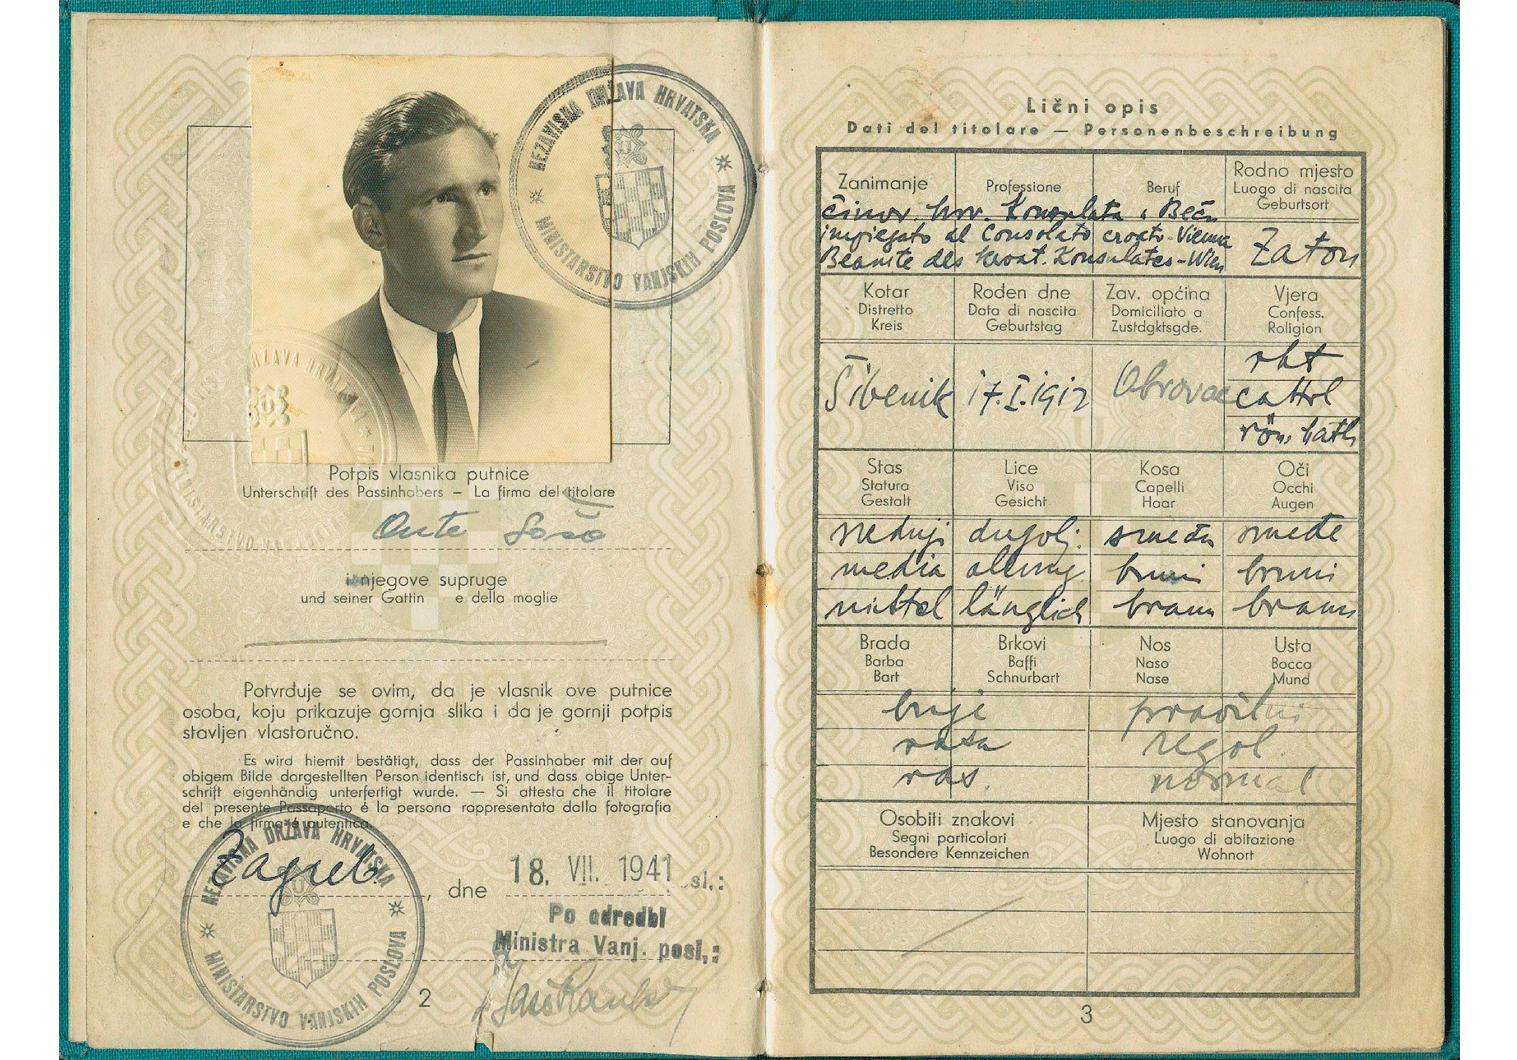 WW2 service passport